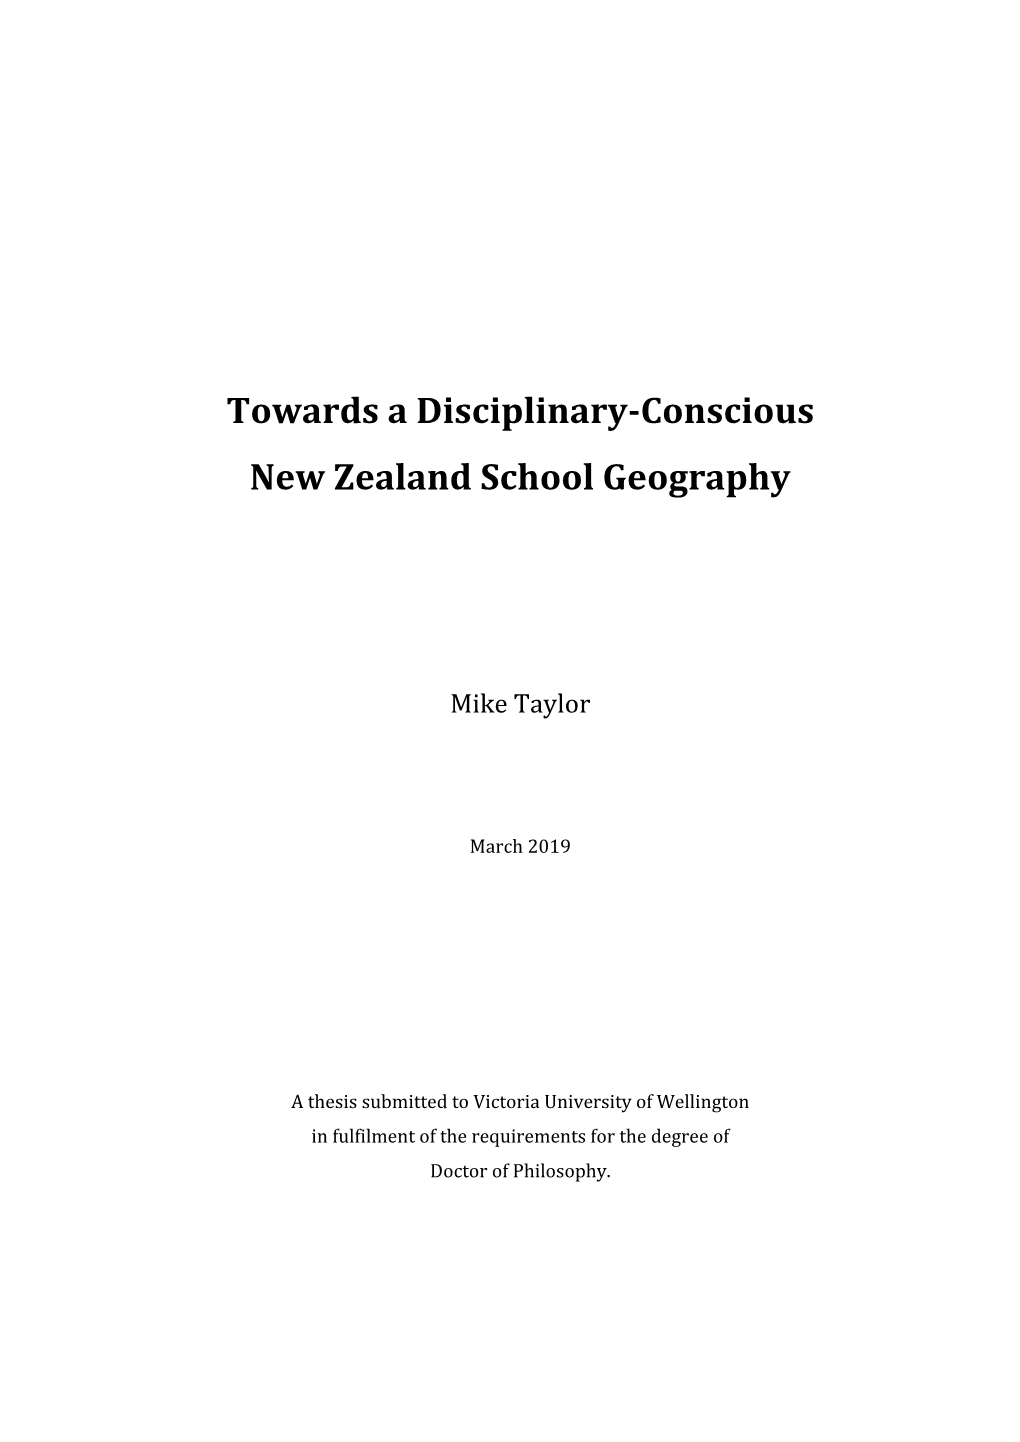 Towards a Disciplinary-Conscious New Zealand School Geography